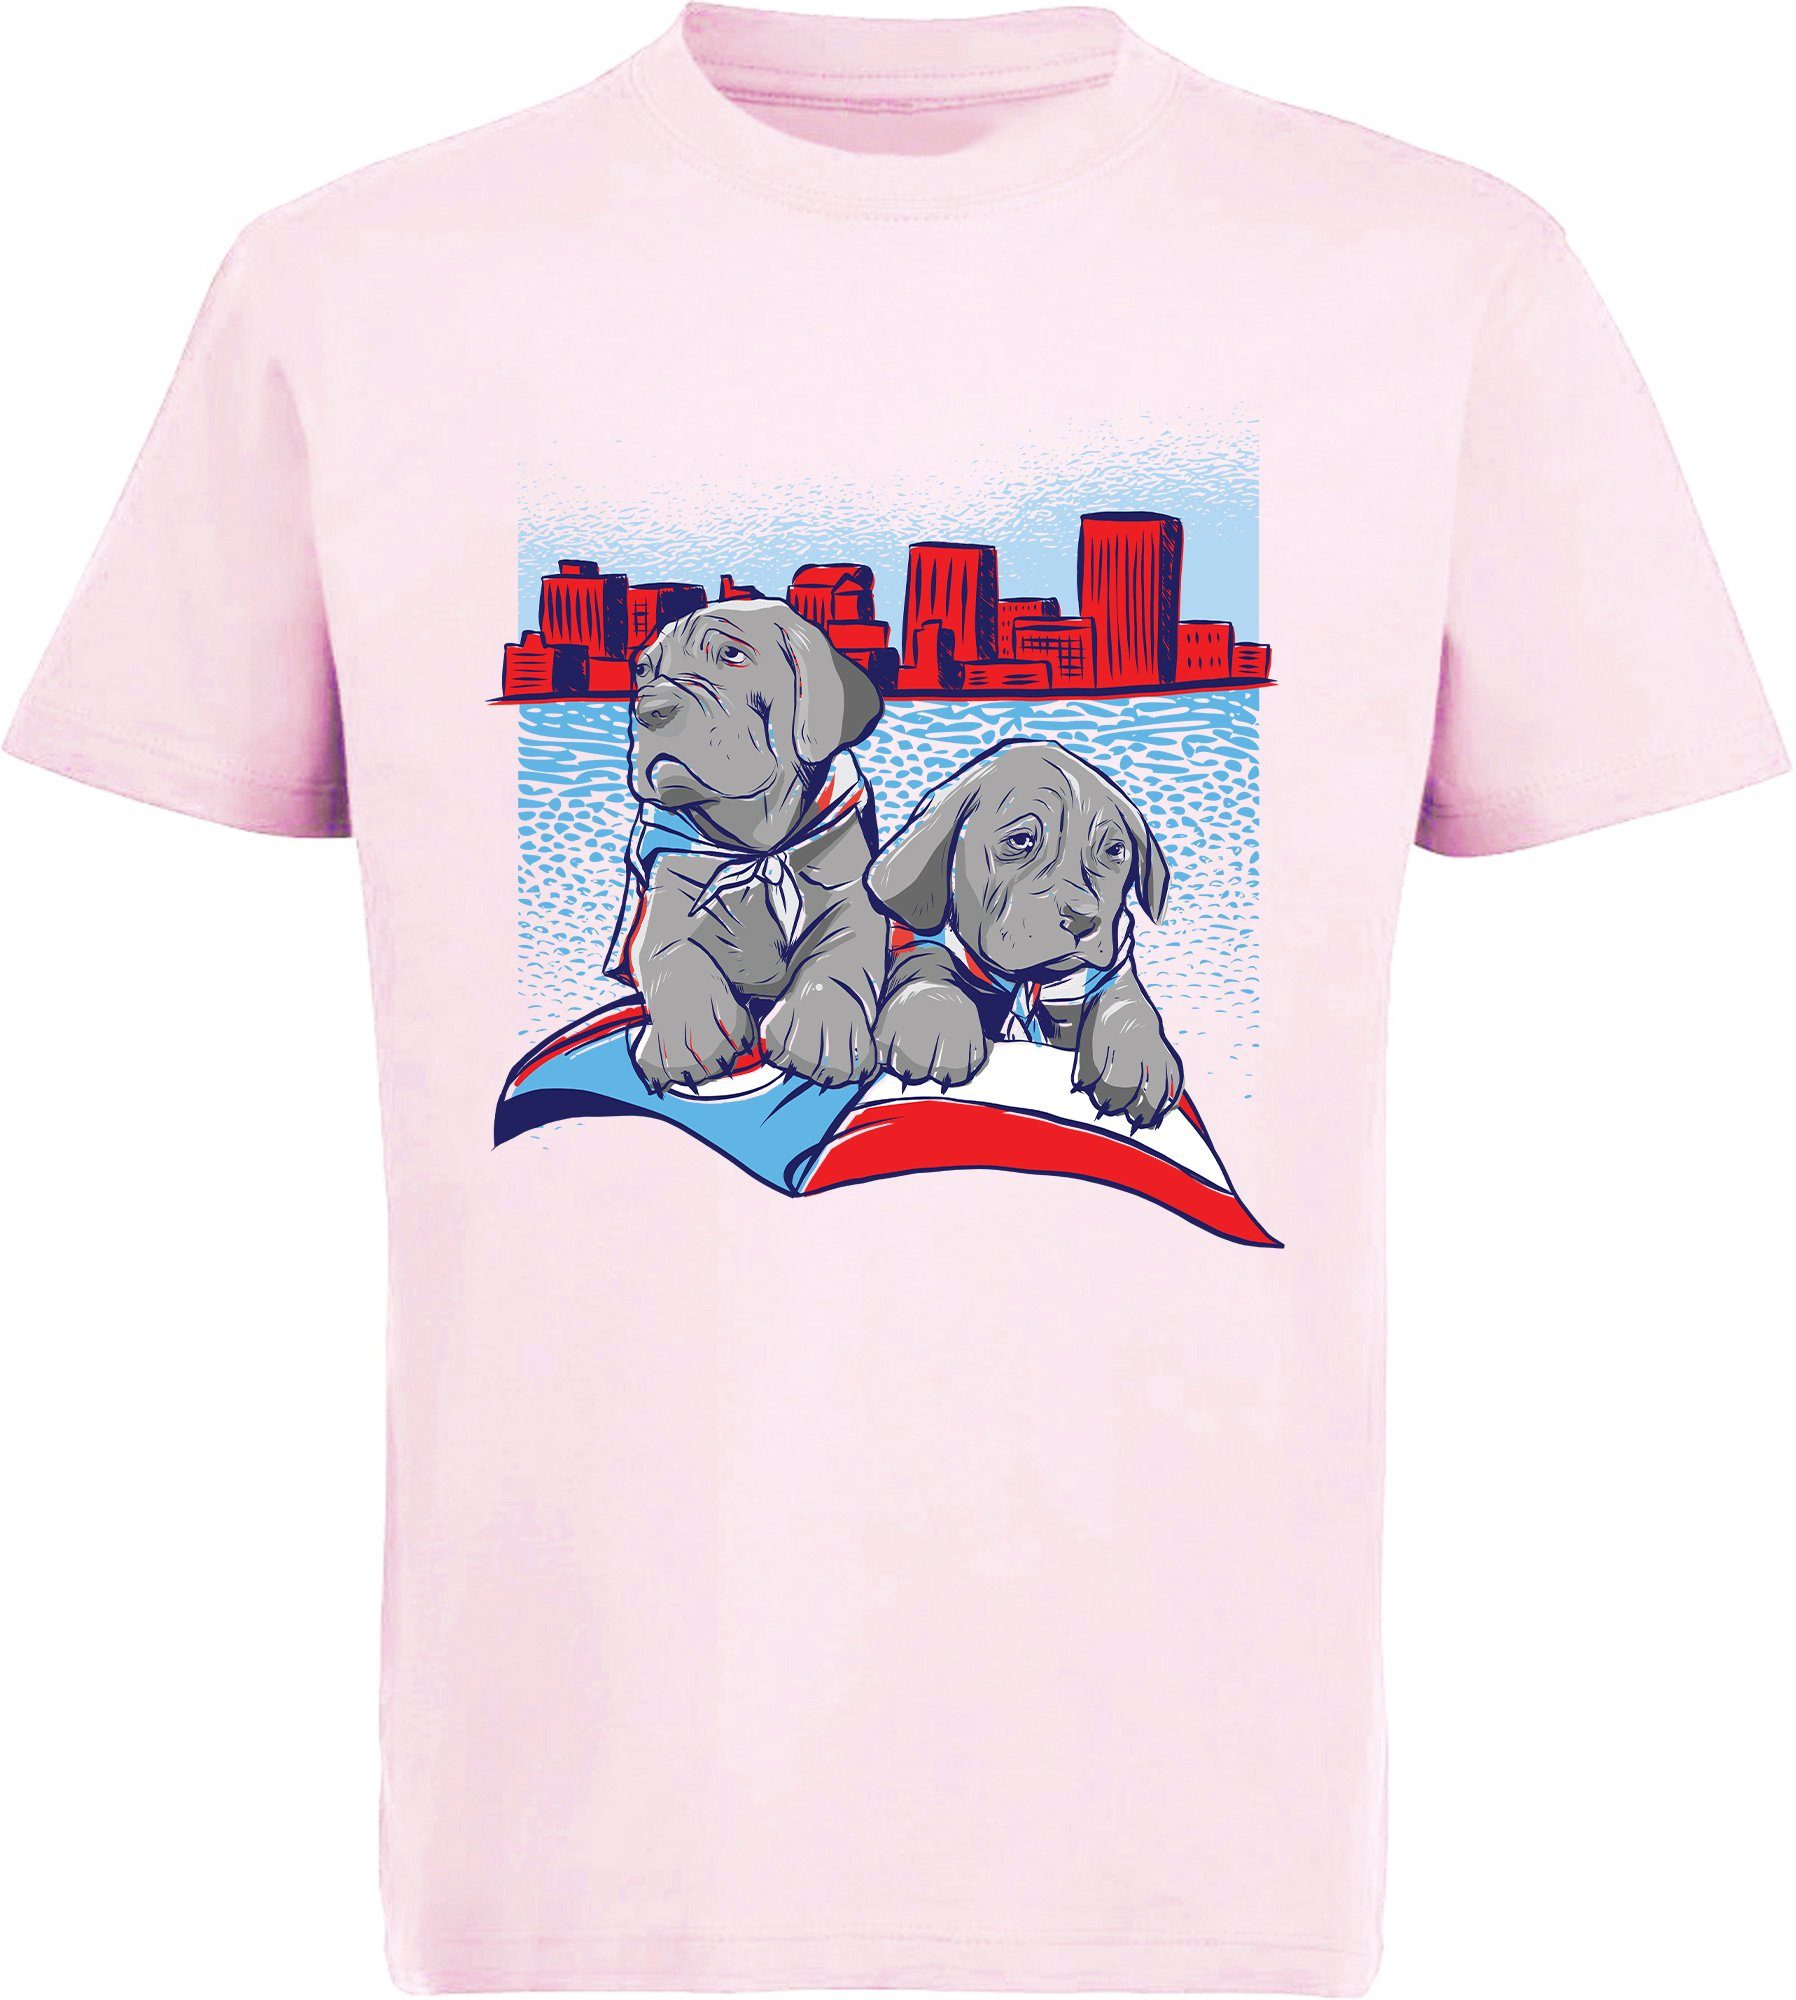 MyDesign24 Print-Shirt Kinder Hunde T-Shirt bedruckt - 2 süße Hundewelpen Baumwollshirt mit Aufdruck, i231 rosa